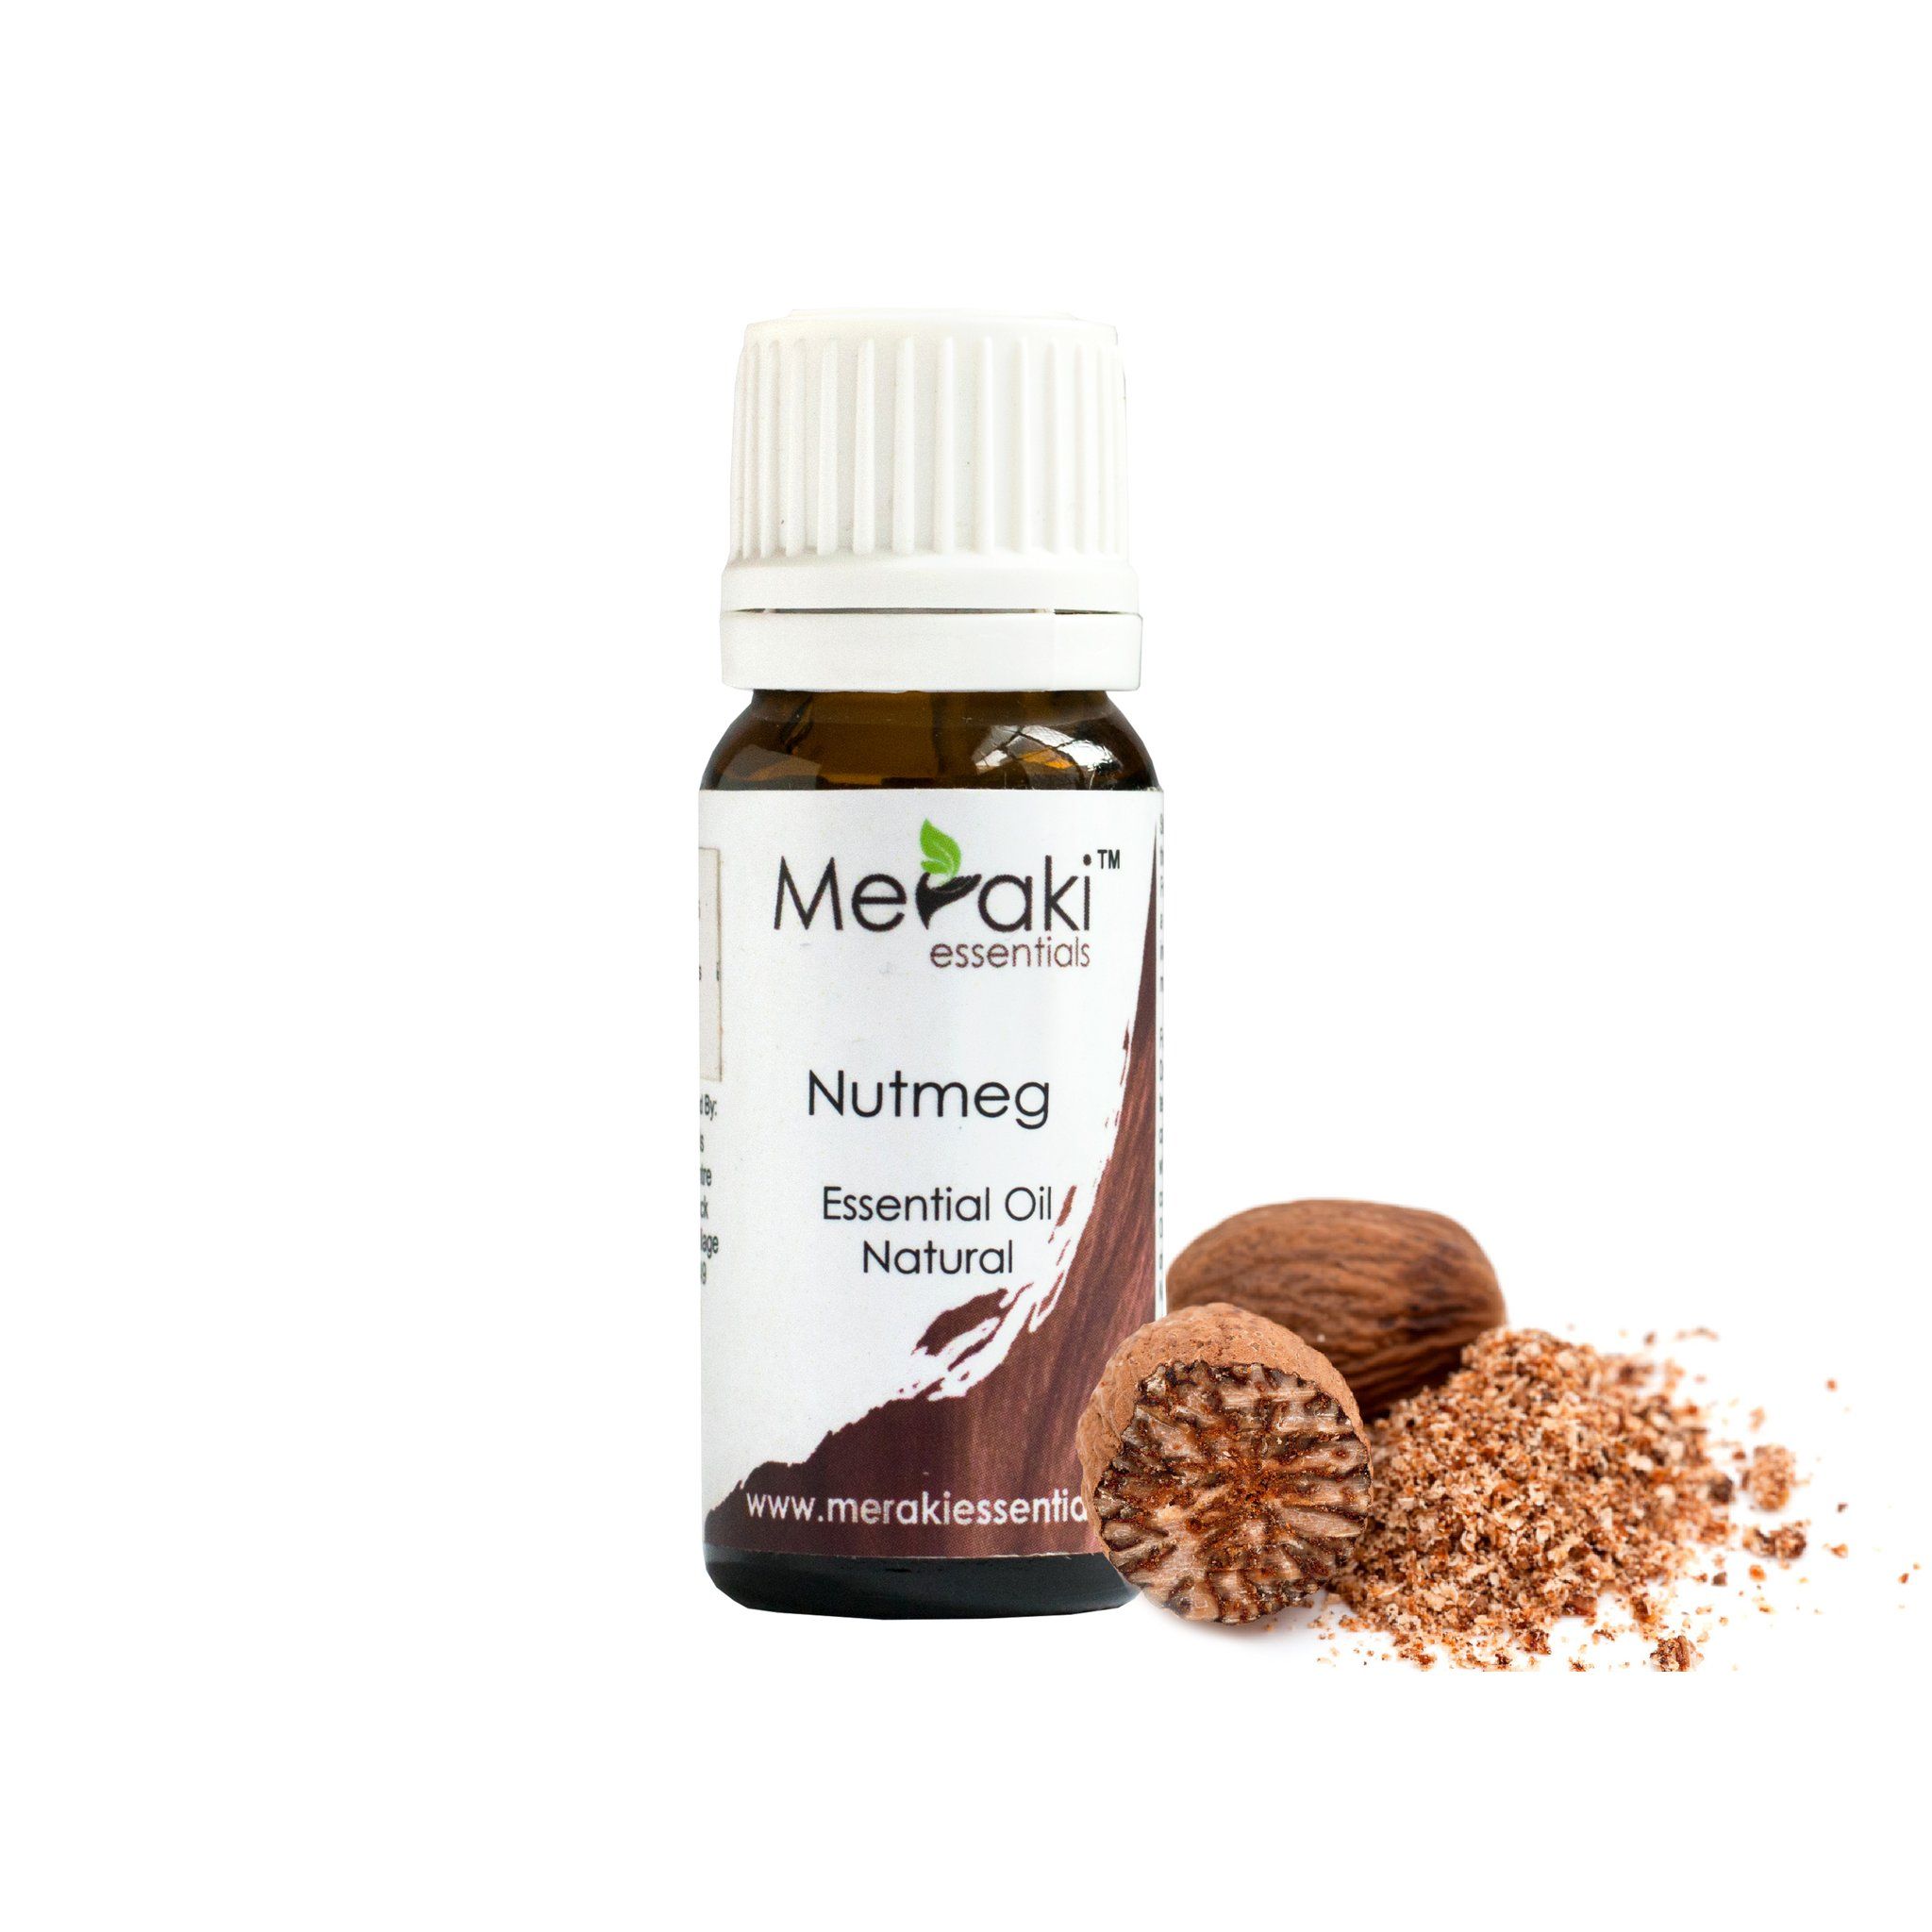 Buy 100% Nutmeg essential oil - Meraki Essential